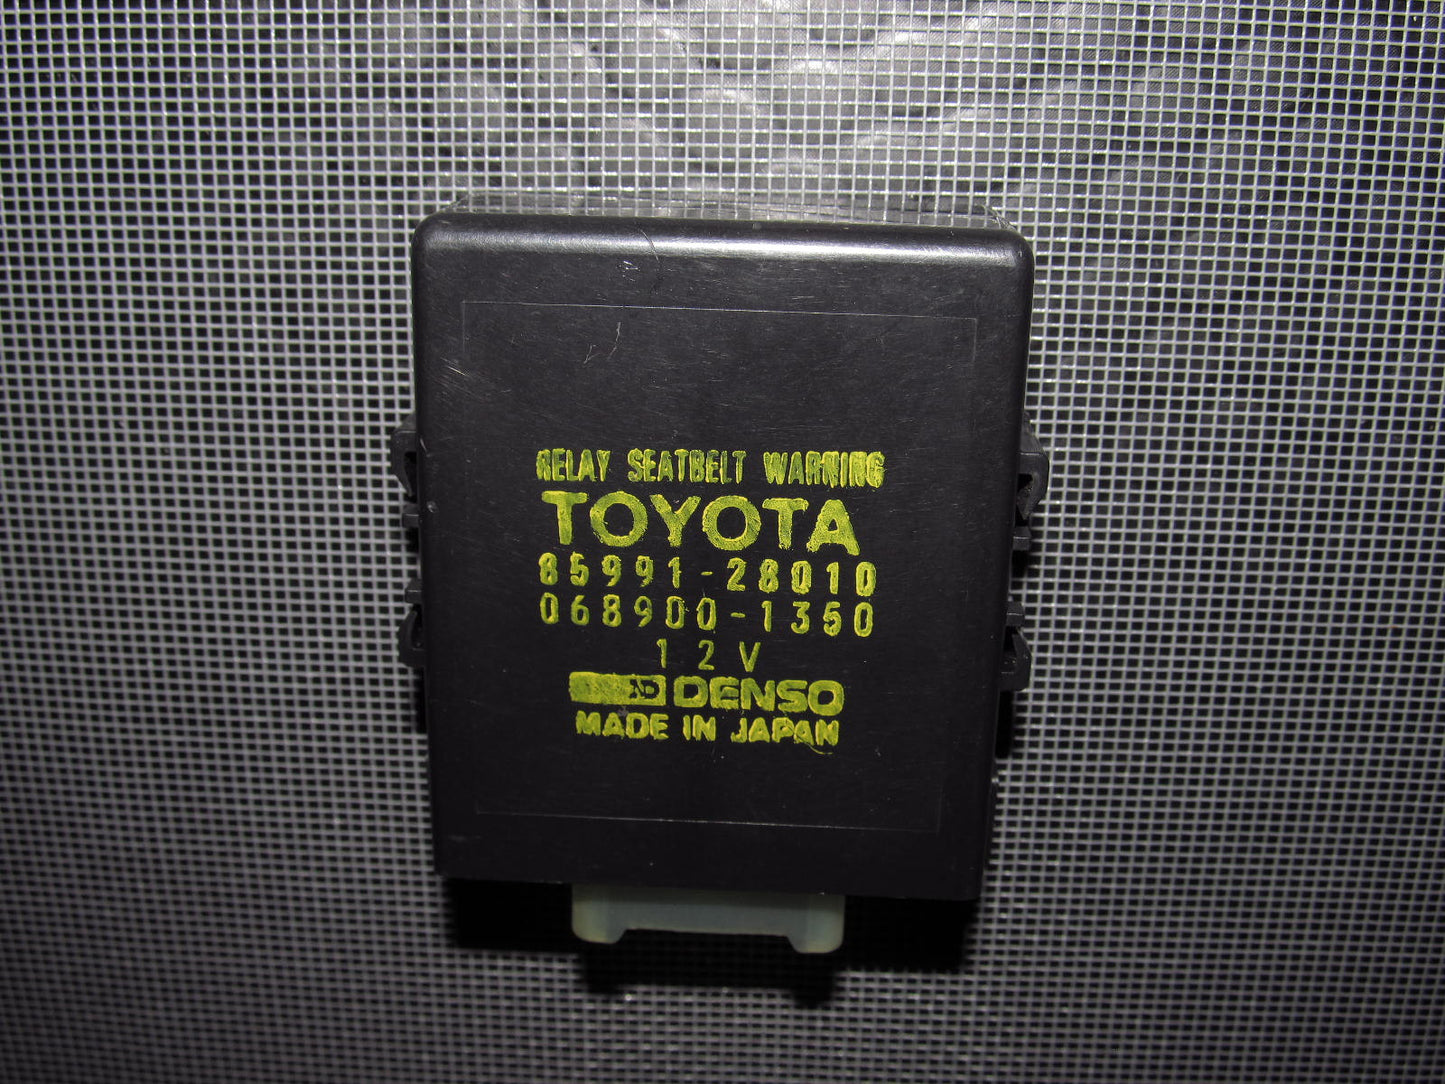 91-97 Toyota Previa Relay Seat Belt Warning Unit Module 85991-28010